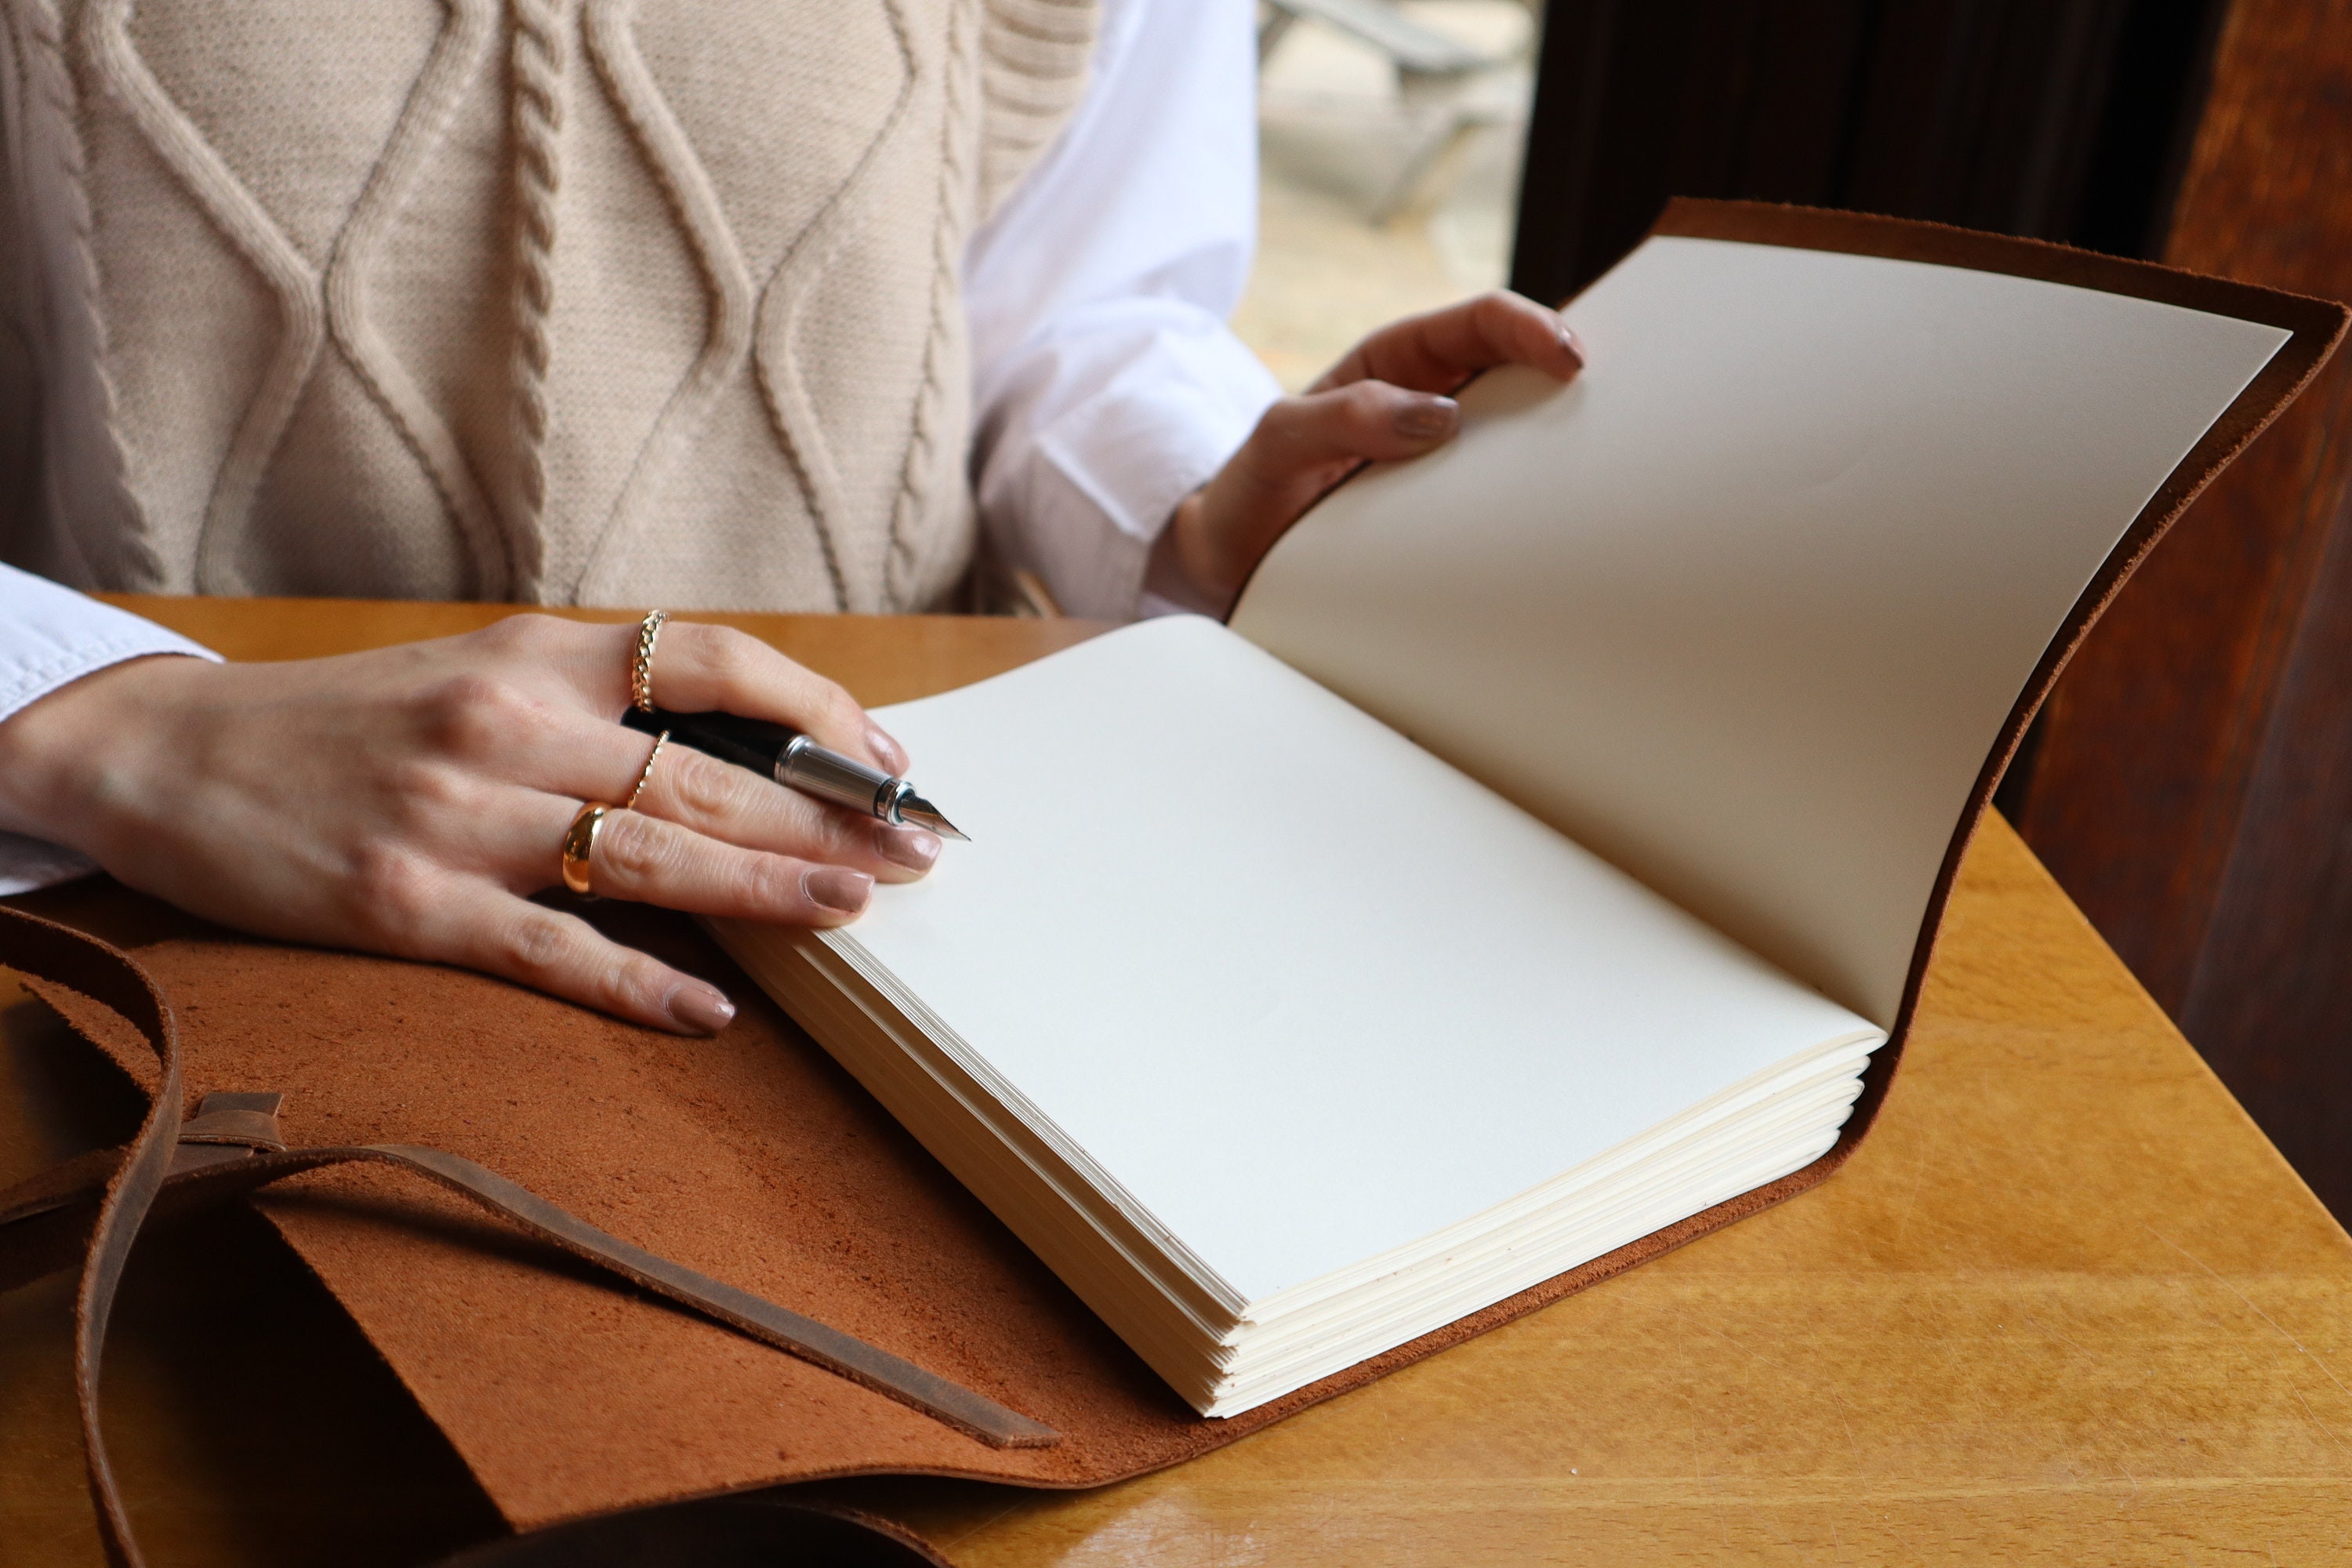 Personalised A5 artist sketchbook notebook hardback - Silver Lettering –  The Little Big Journal Company